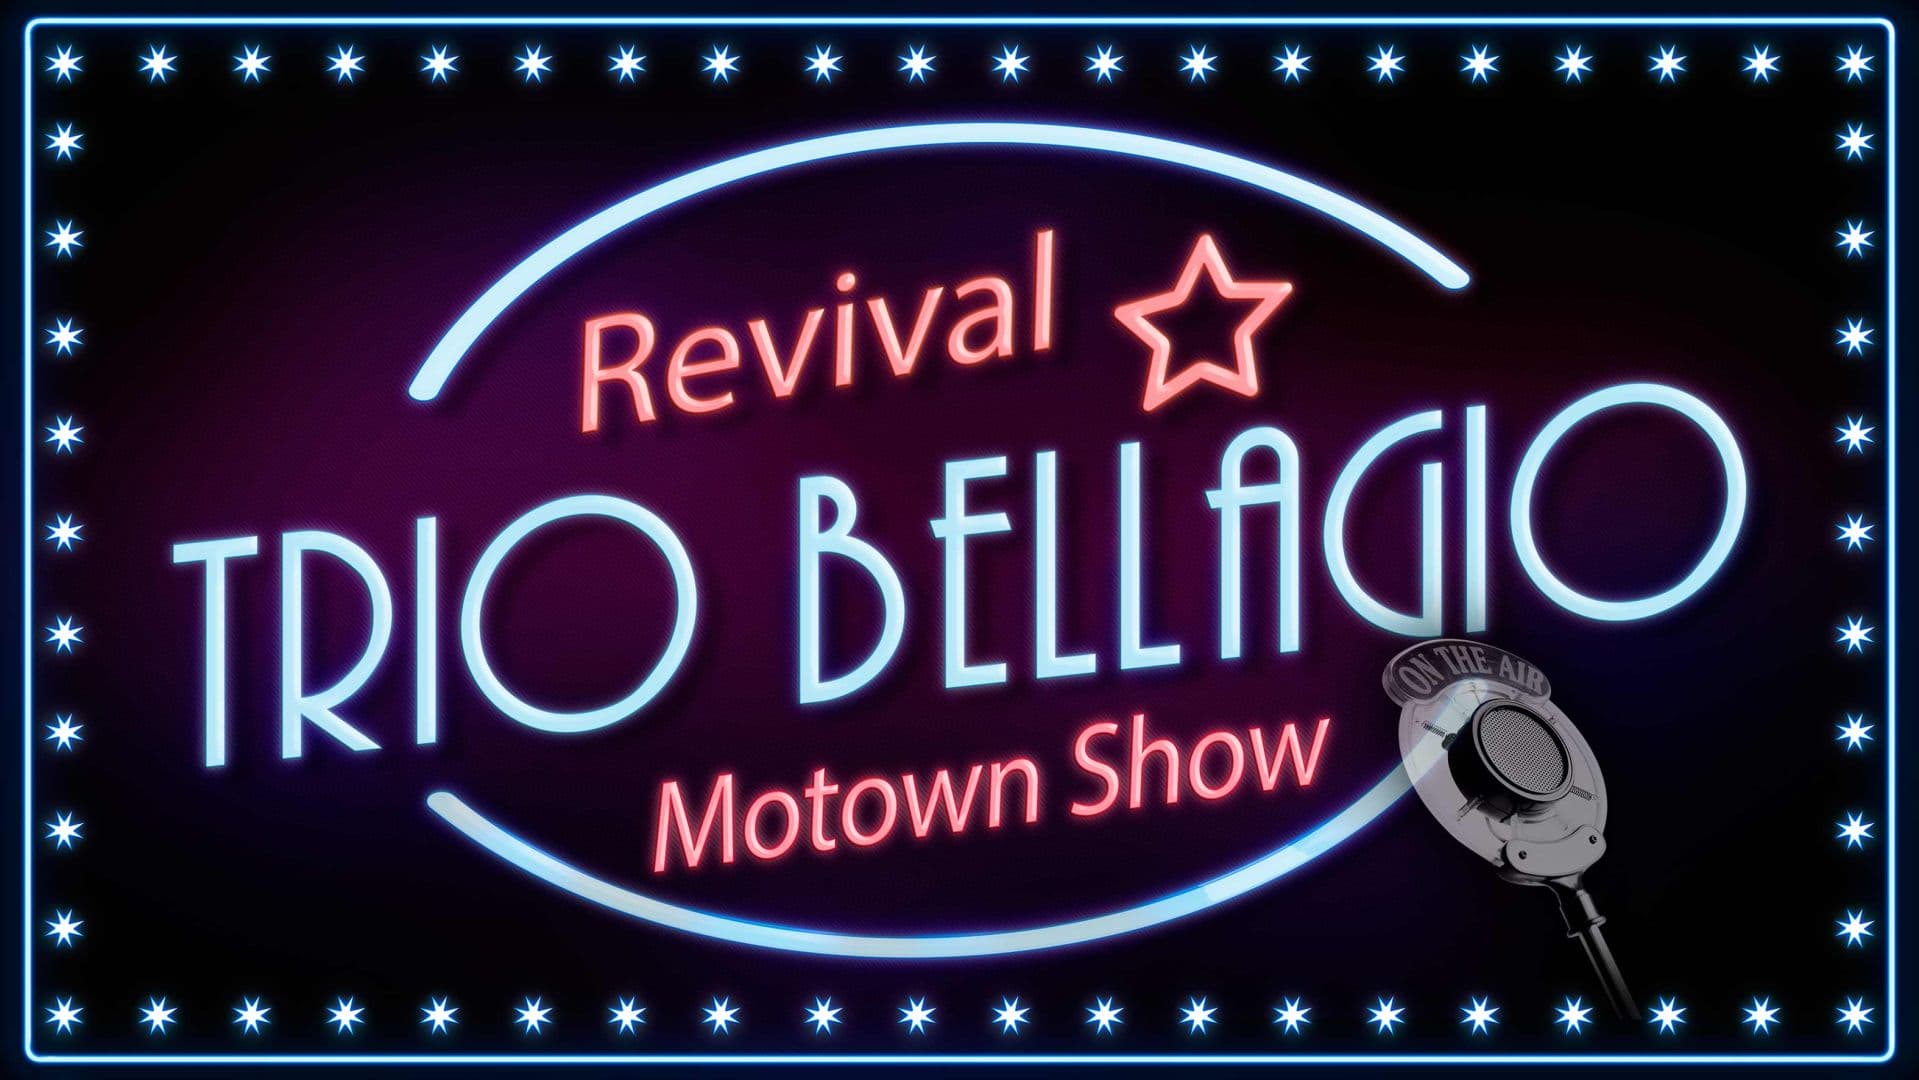 Revival Motown Show By trio Bellagio